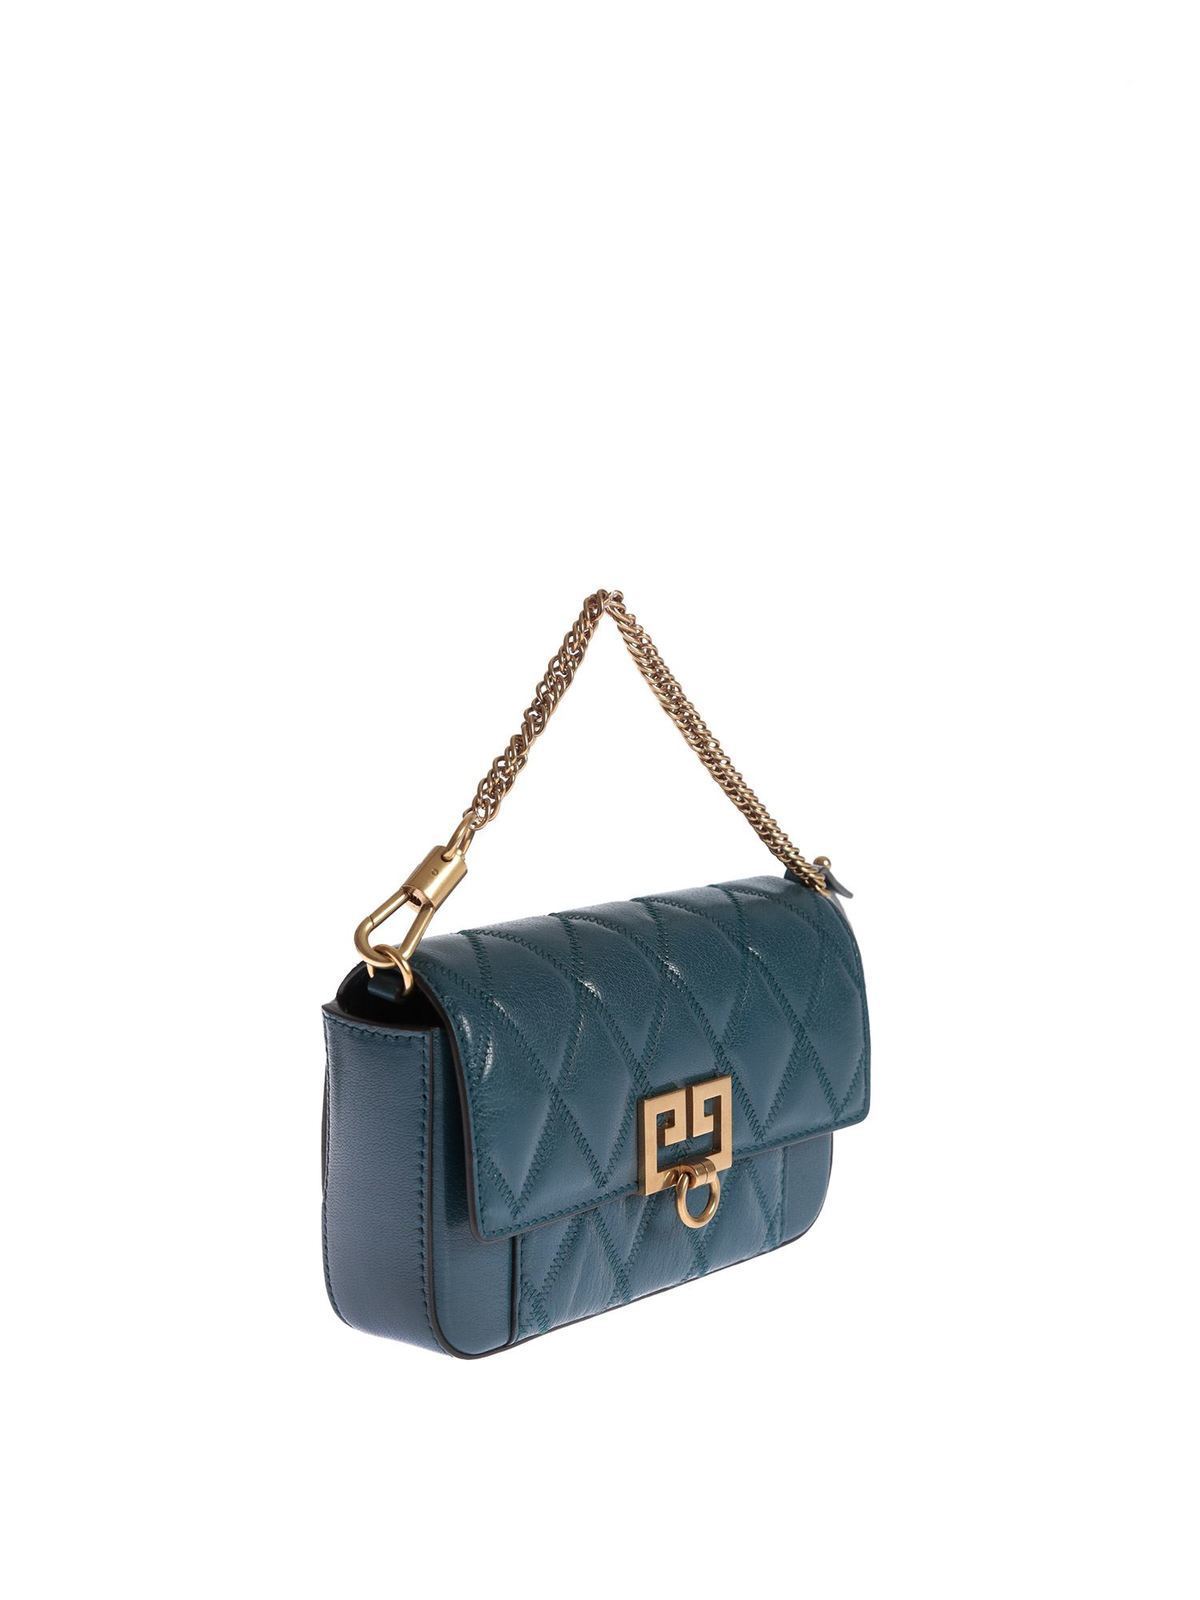 Givenchy - Pocket Mini bag in Oil Blue 